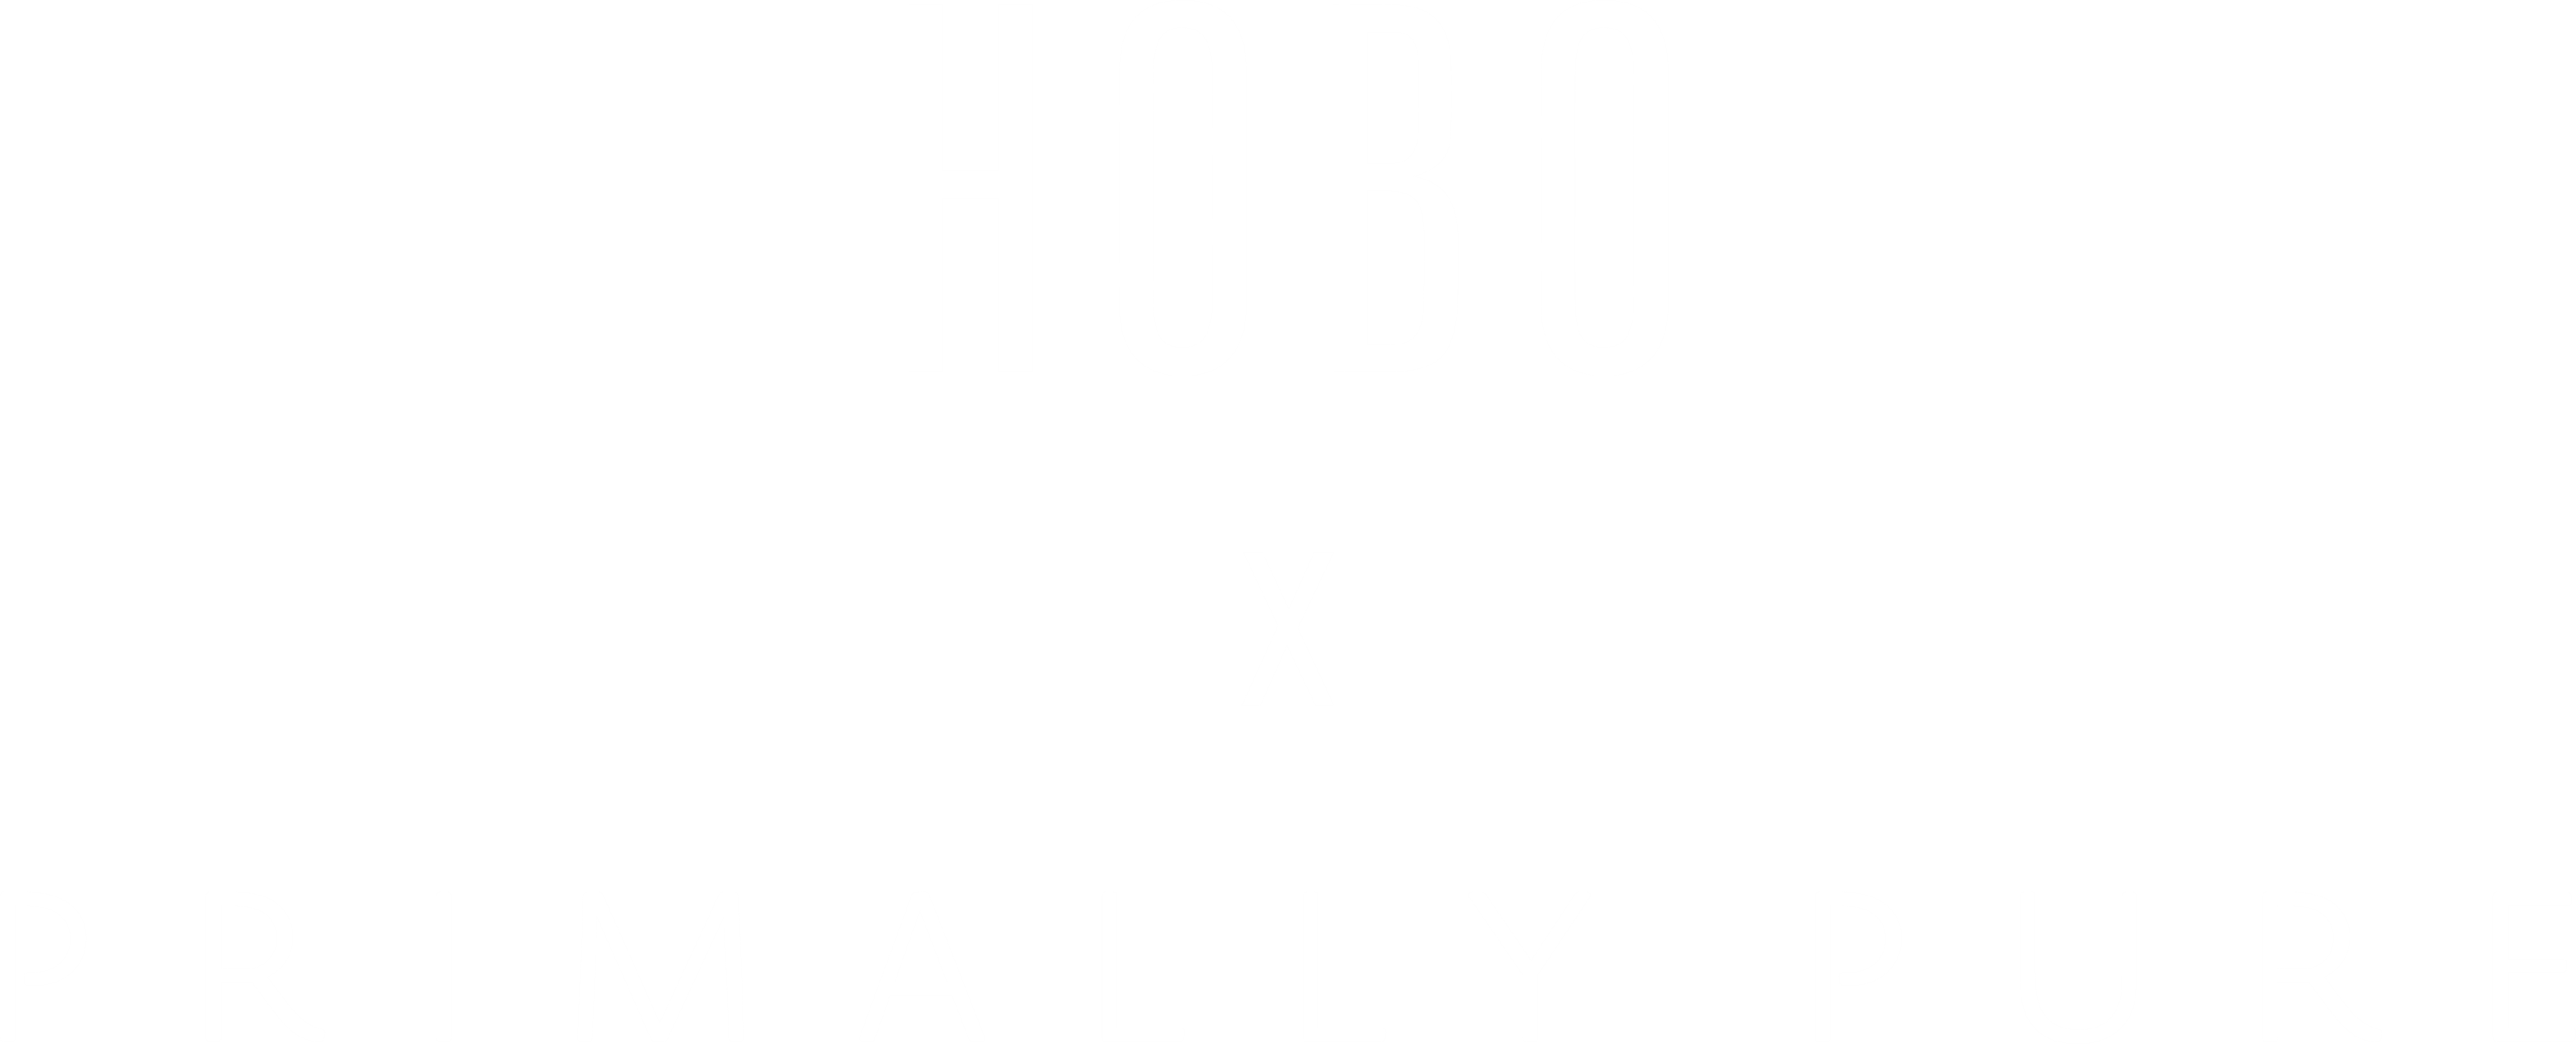 HOBO x Primally Pure logo